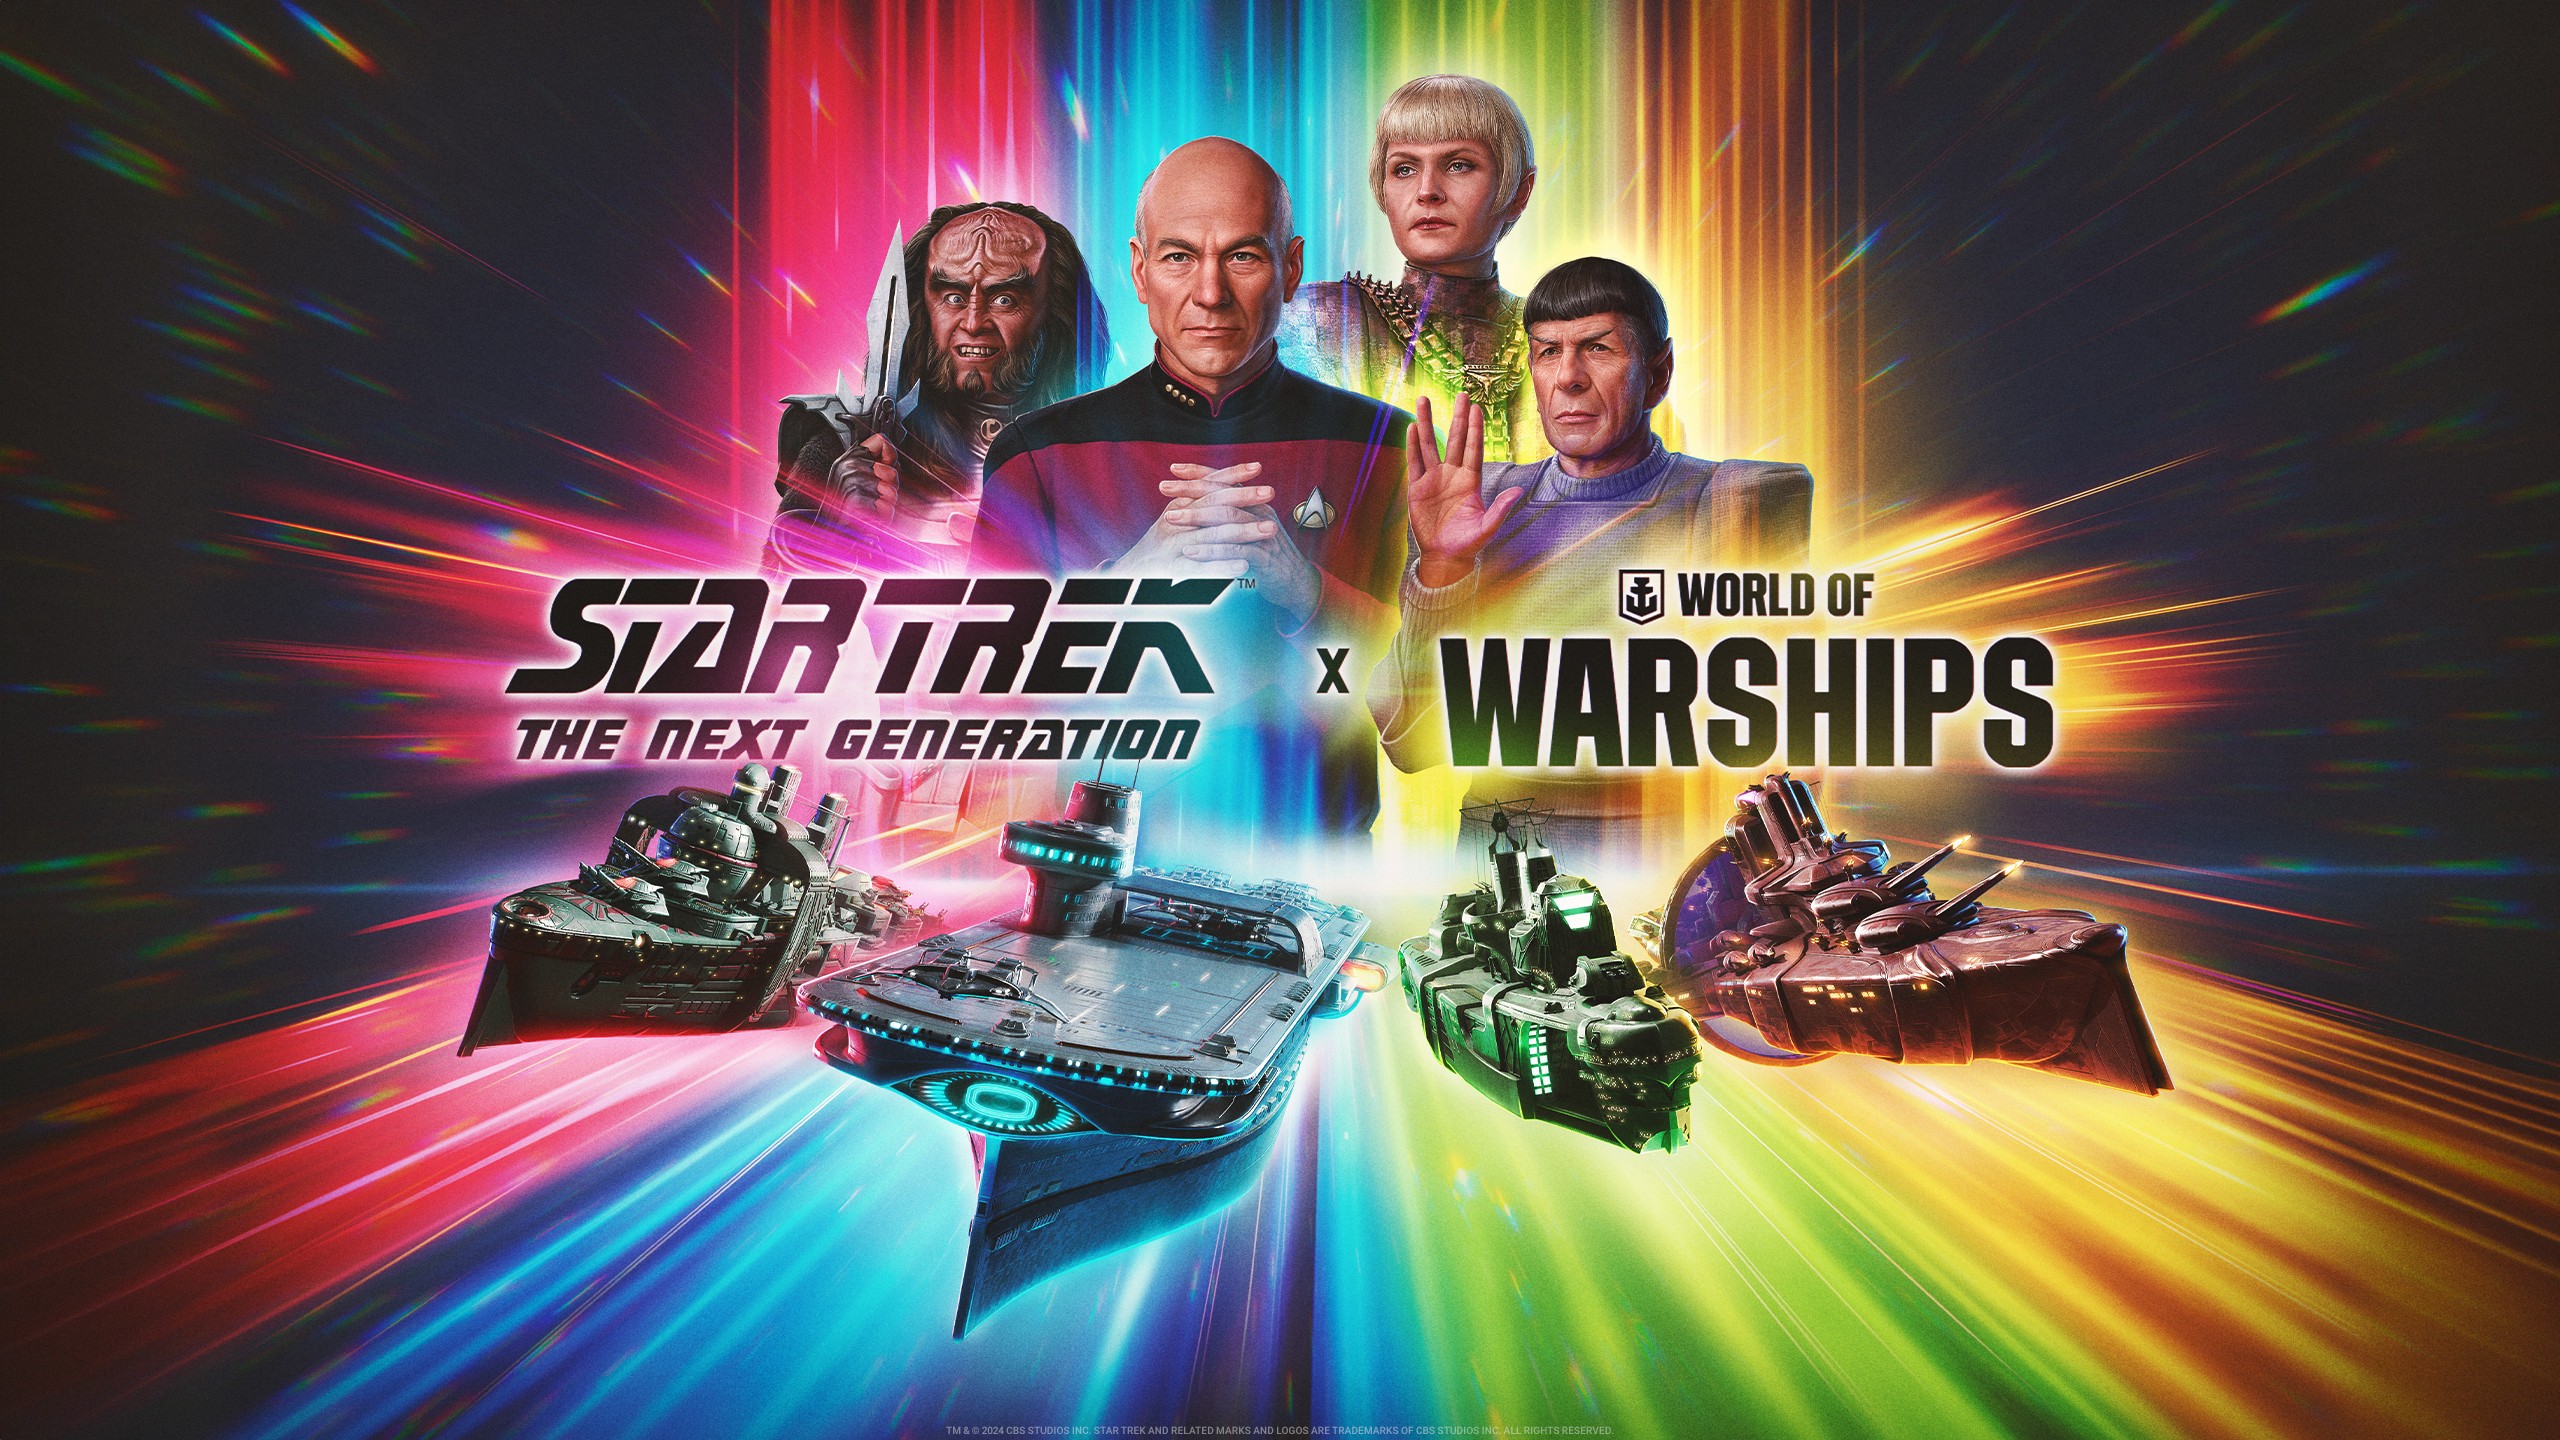 Star Trek w World of Warships i World of Tanks Blitz